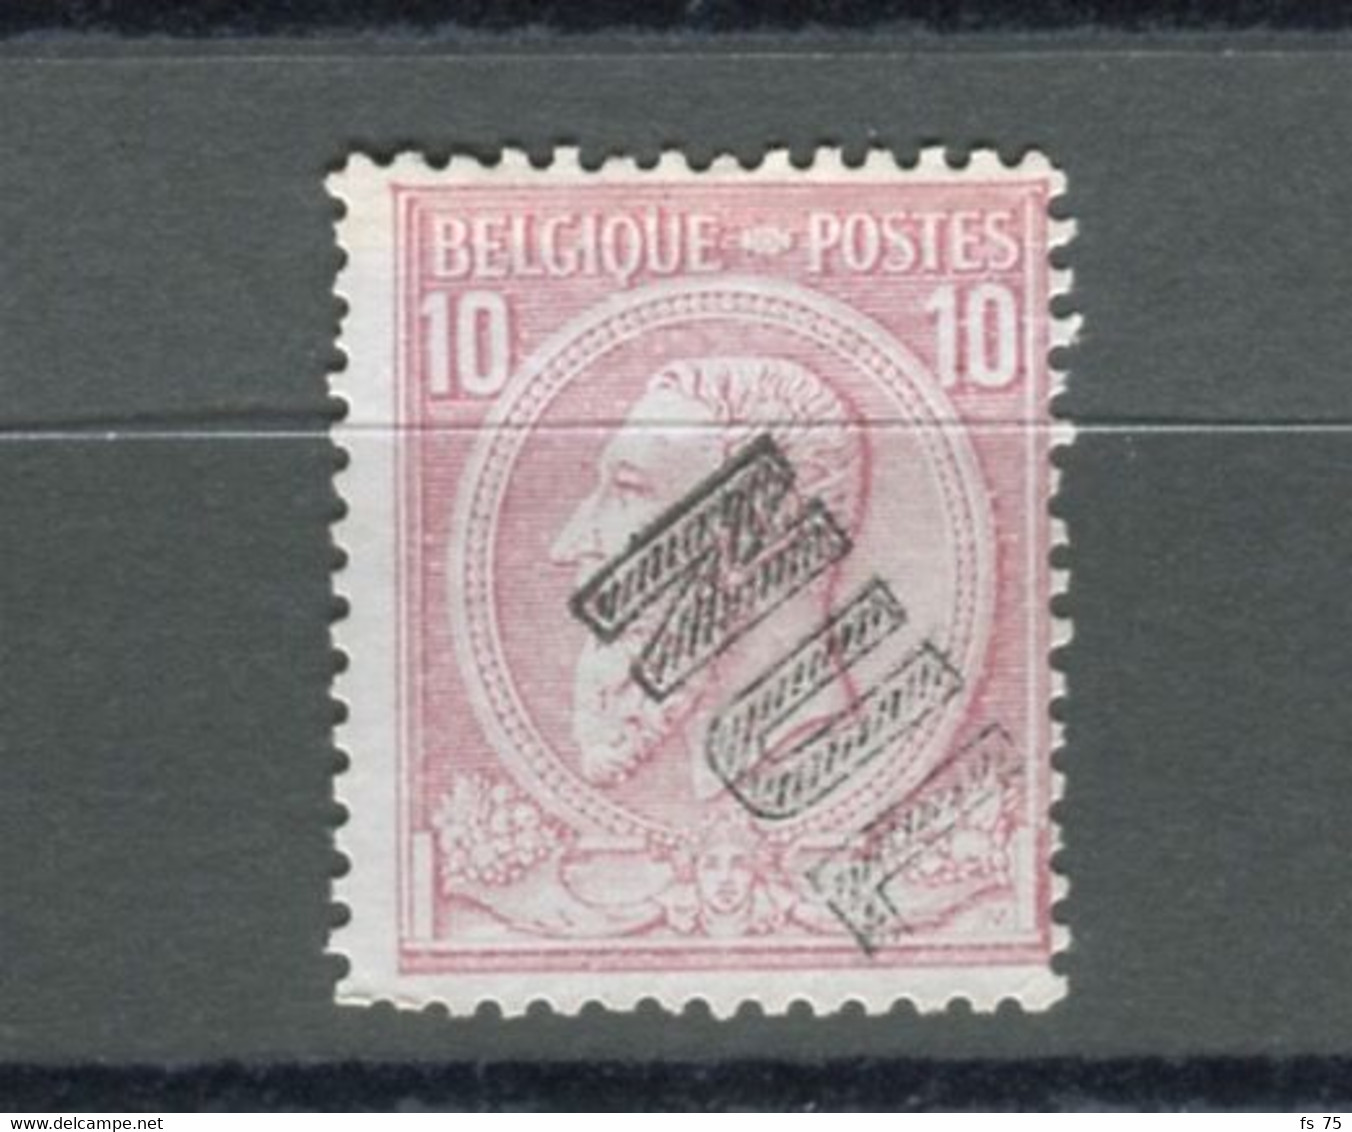 BELGIQUE - COB N°46 10C ROSE OBLITERE GRIFFE NUL - 1884-1891 Leopoldo II